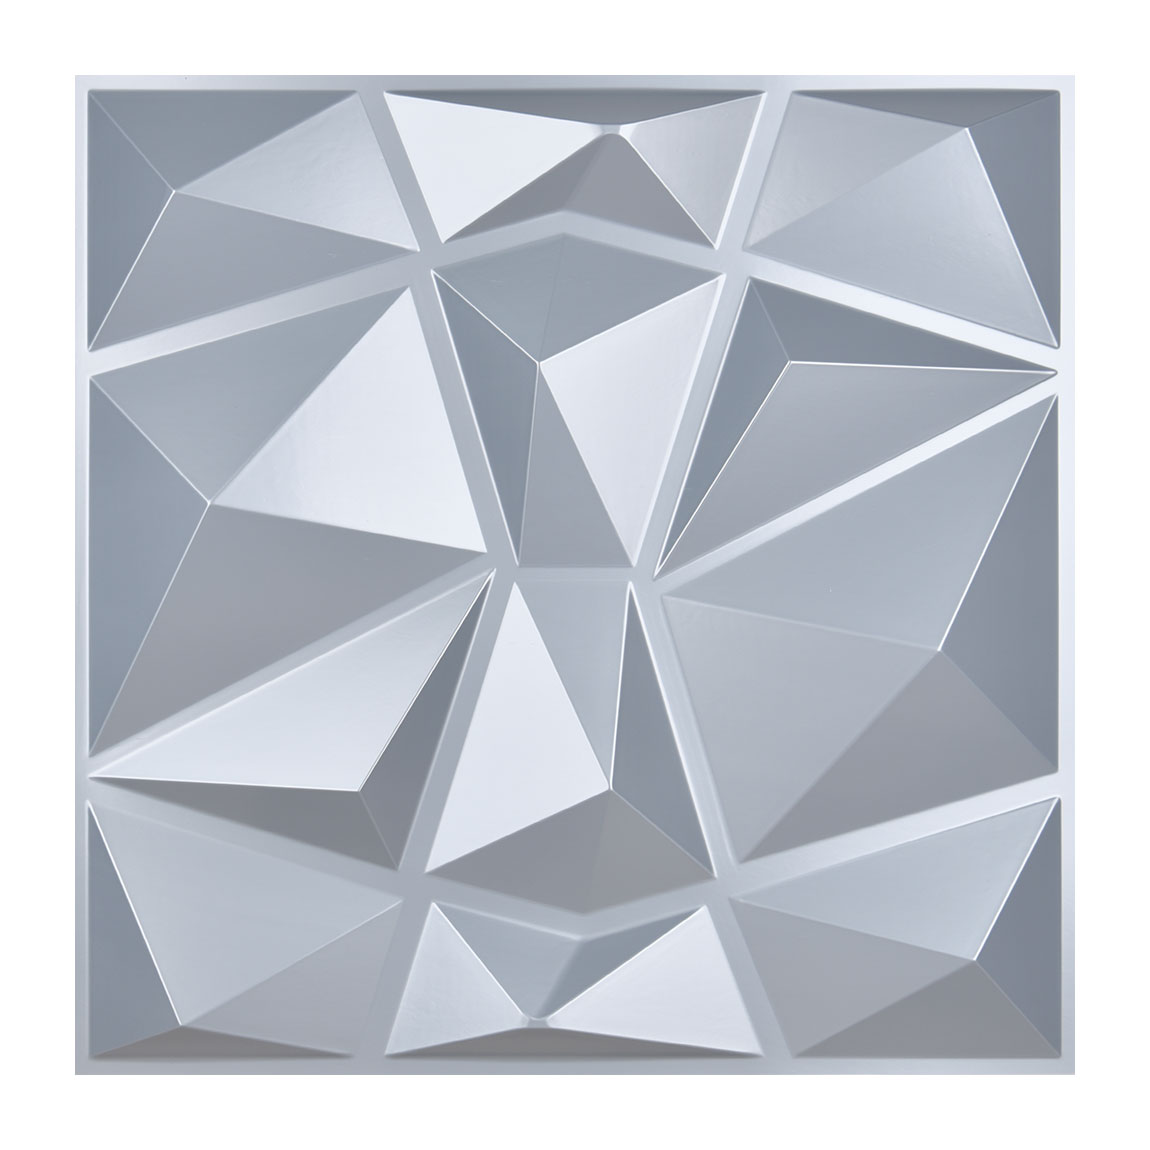 A10038GY - Textures 3D Wall Panels Grey Diamond Wall Design, 12 Tiles 32 SF